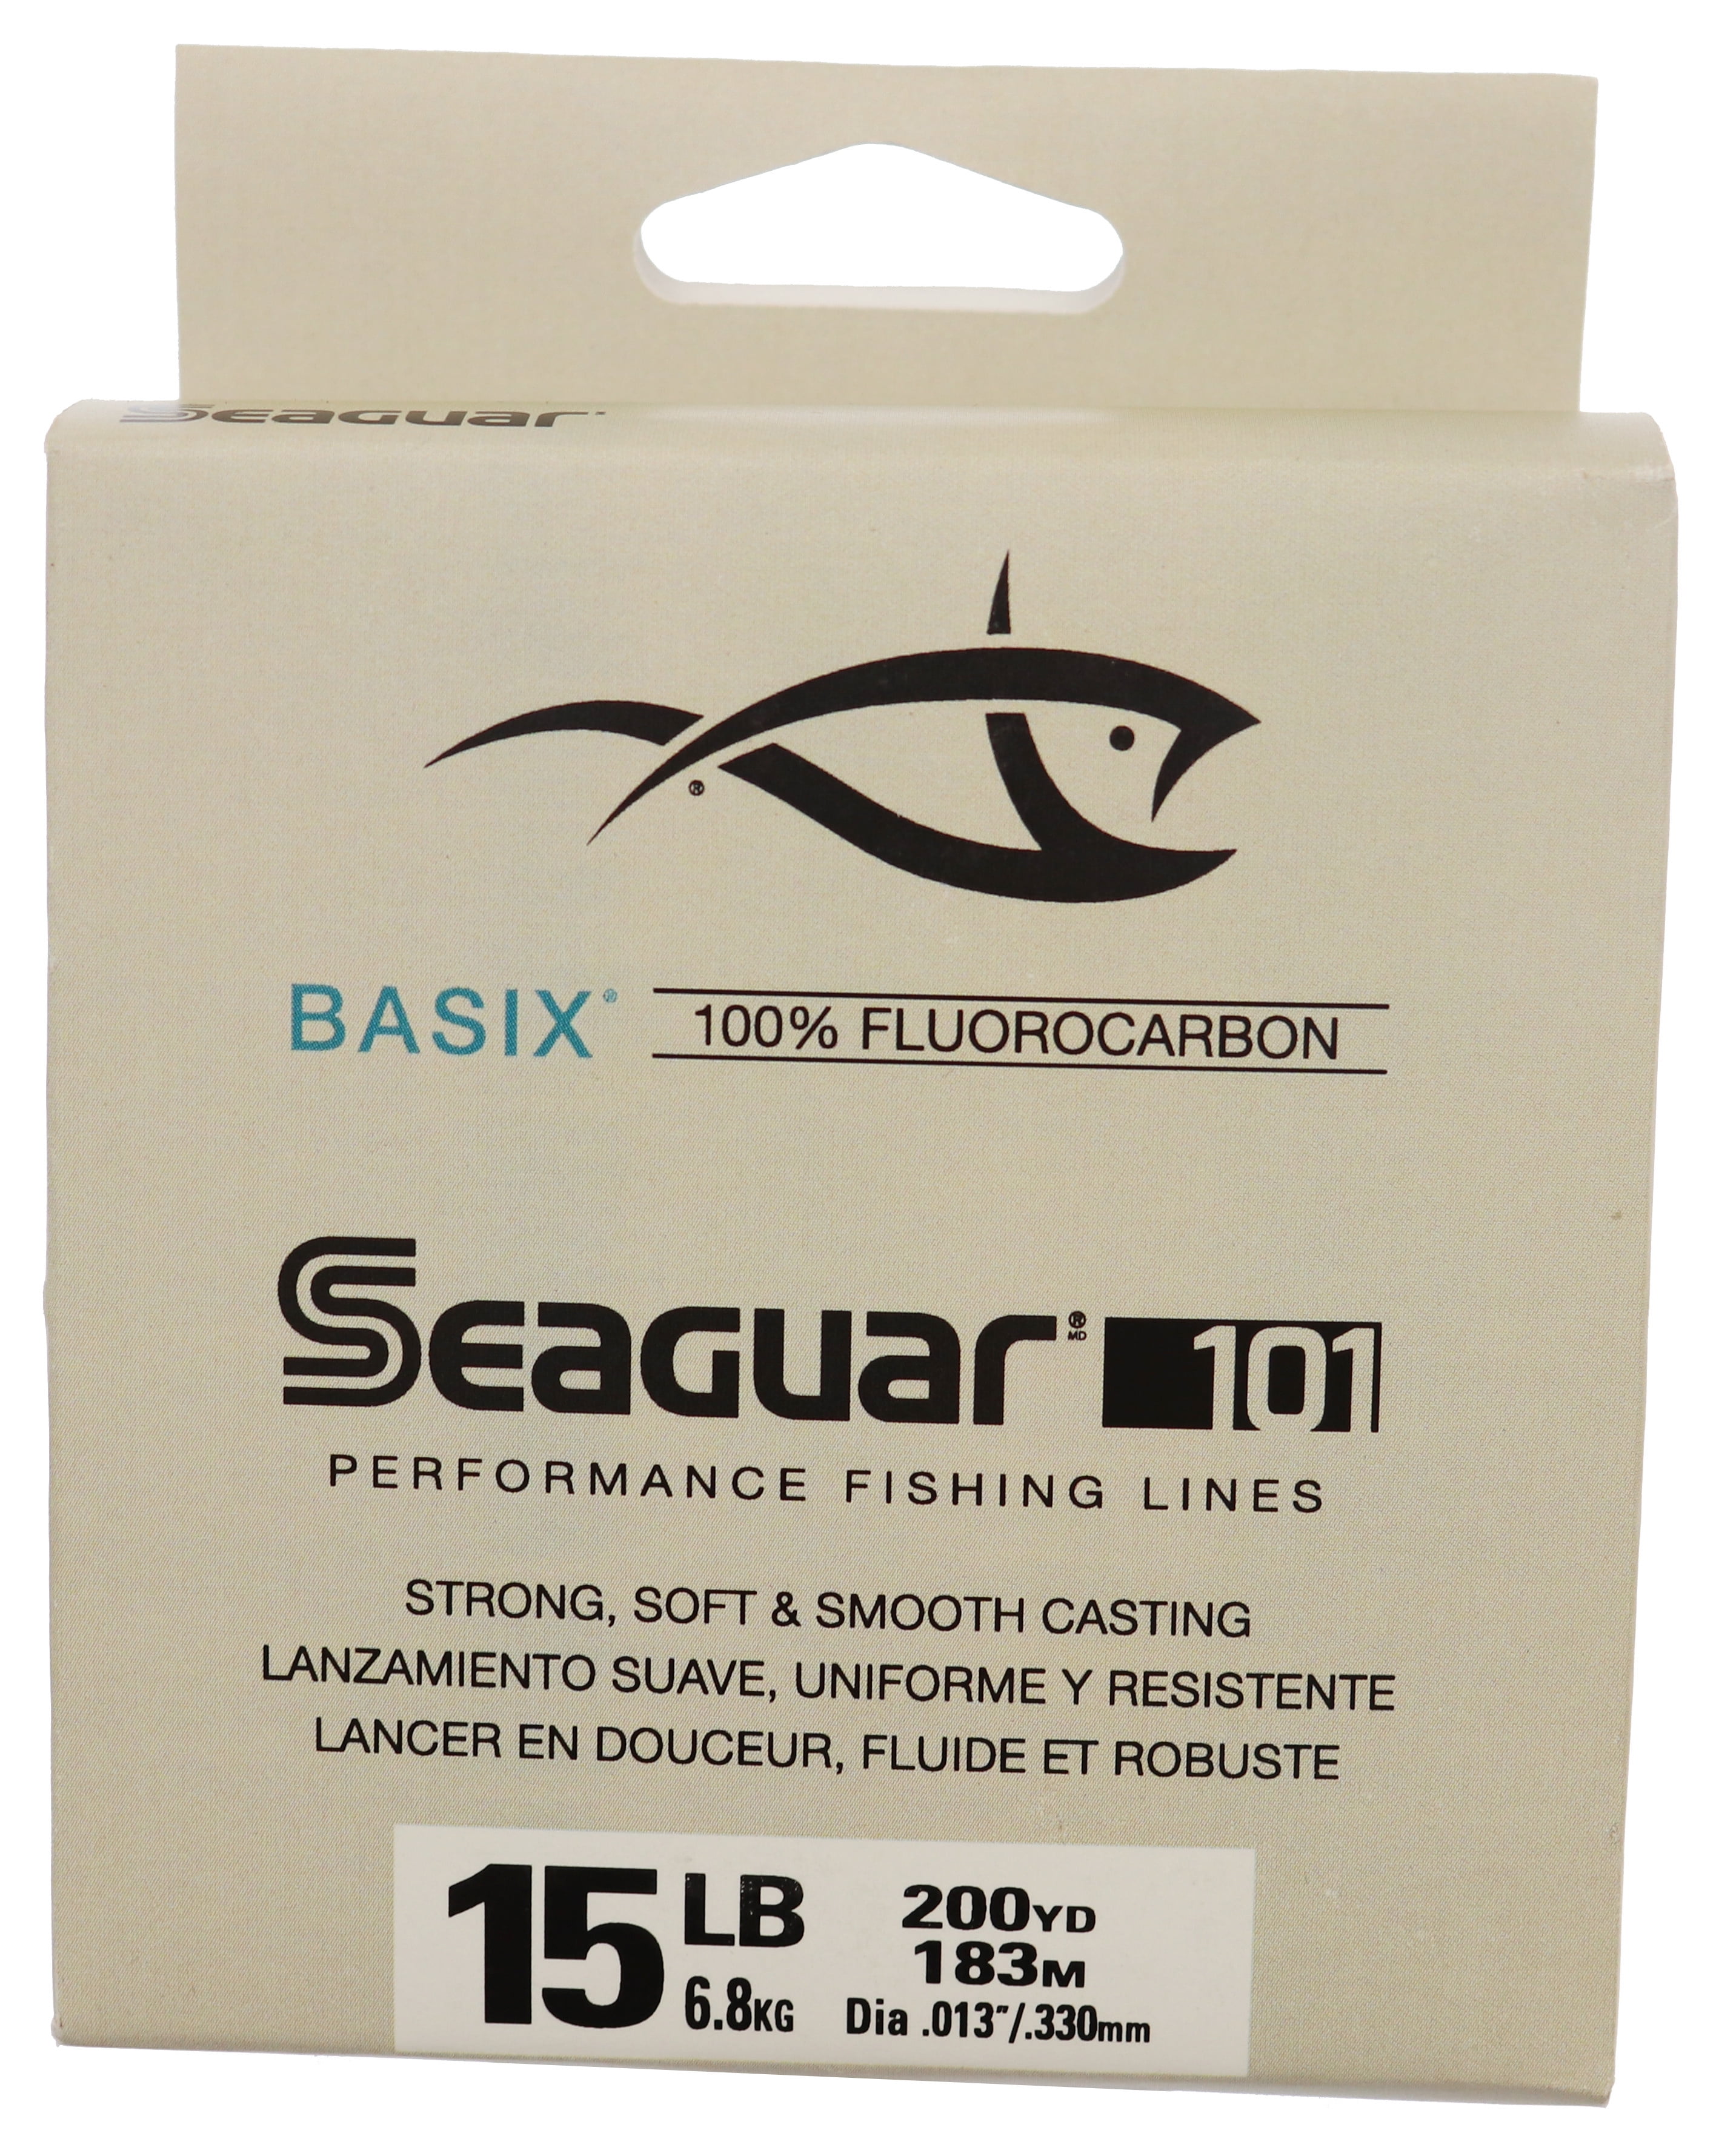 Seaguar BasiX Fluorocarbon Line - Webb's Sporting Goods